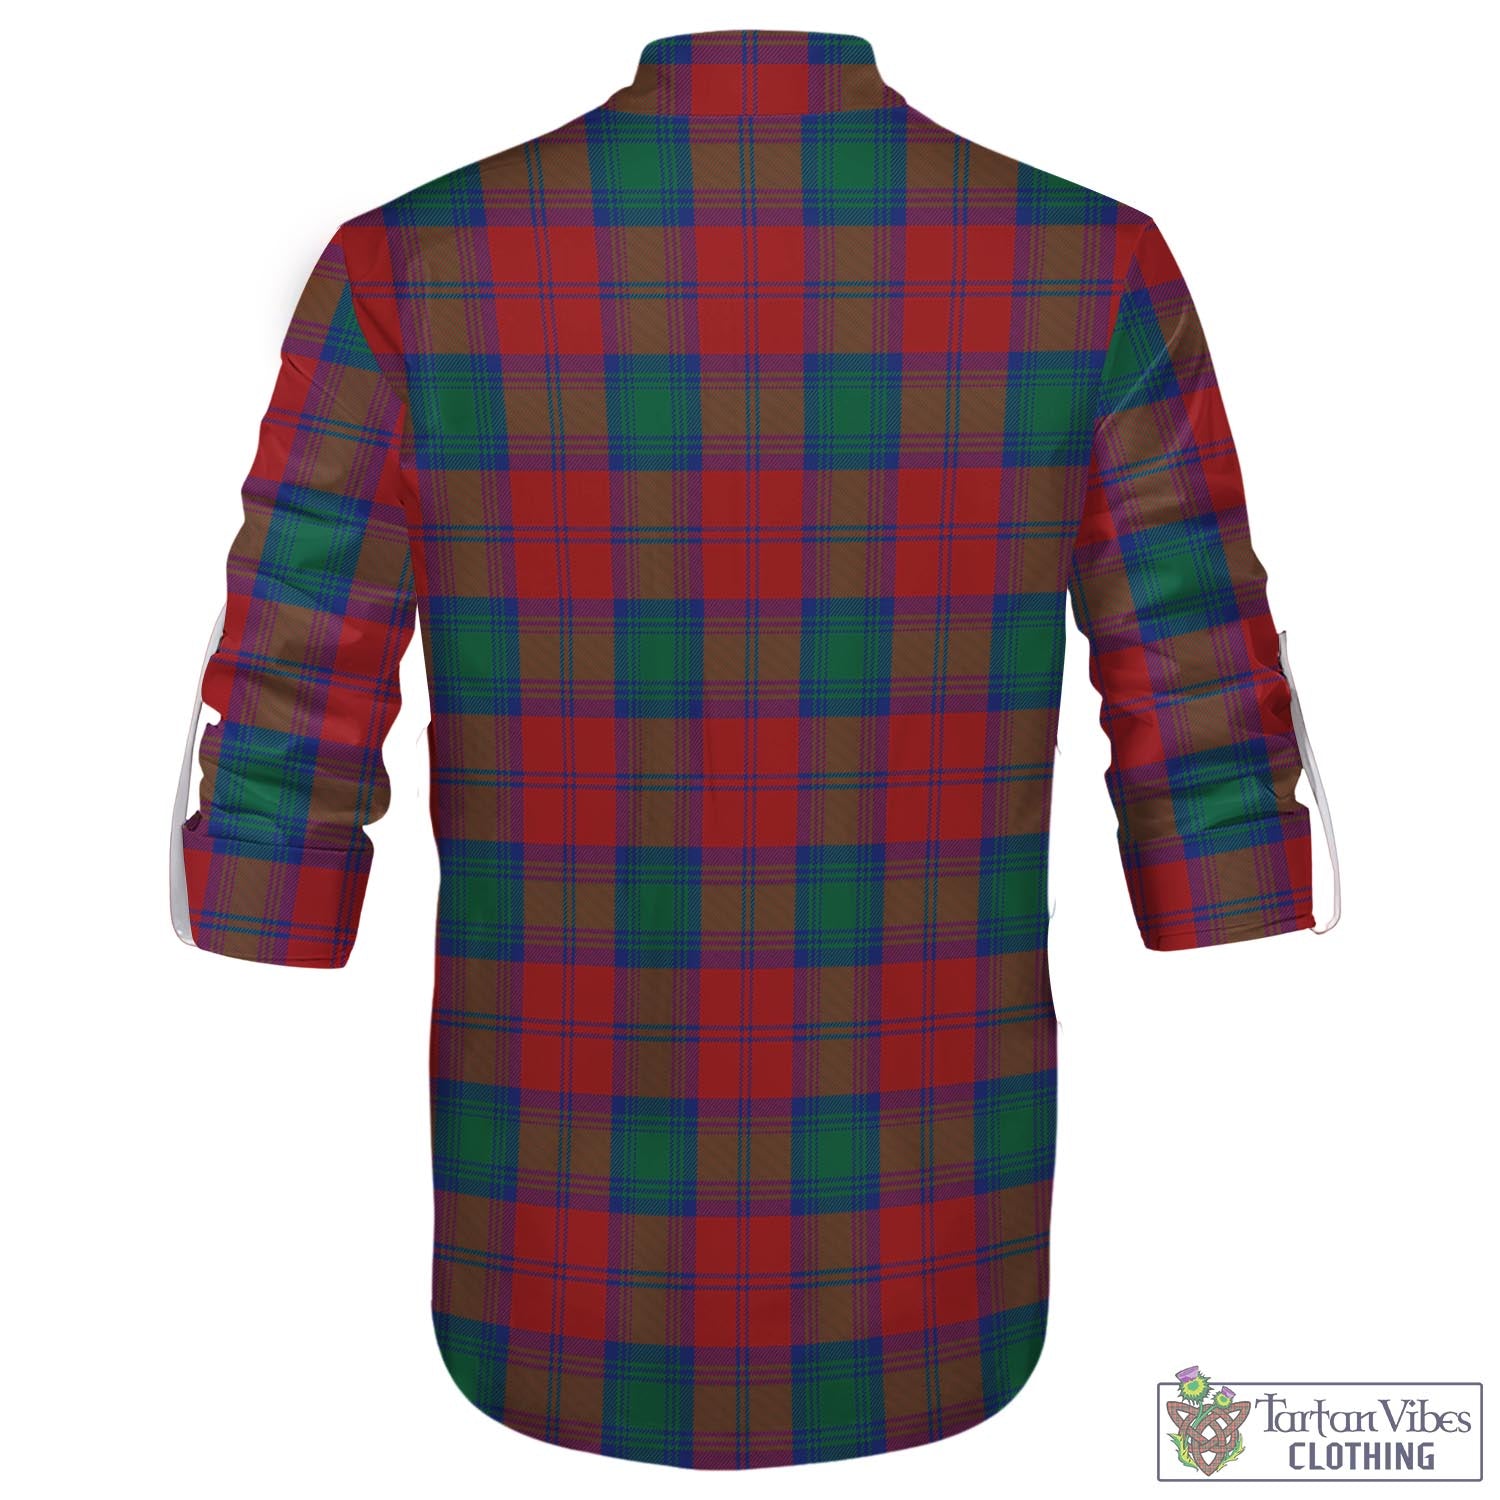 Tartan Vibes Clothing Auchinleck Tartan Men's Scottish Traditional Jacobite Ghillie Kilt Shirt